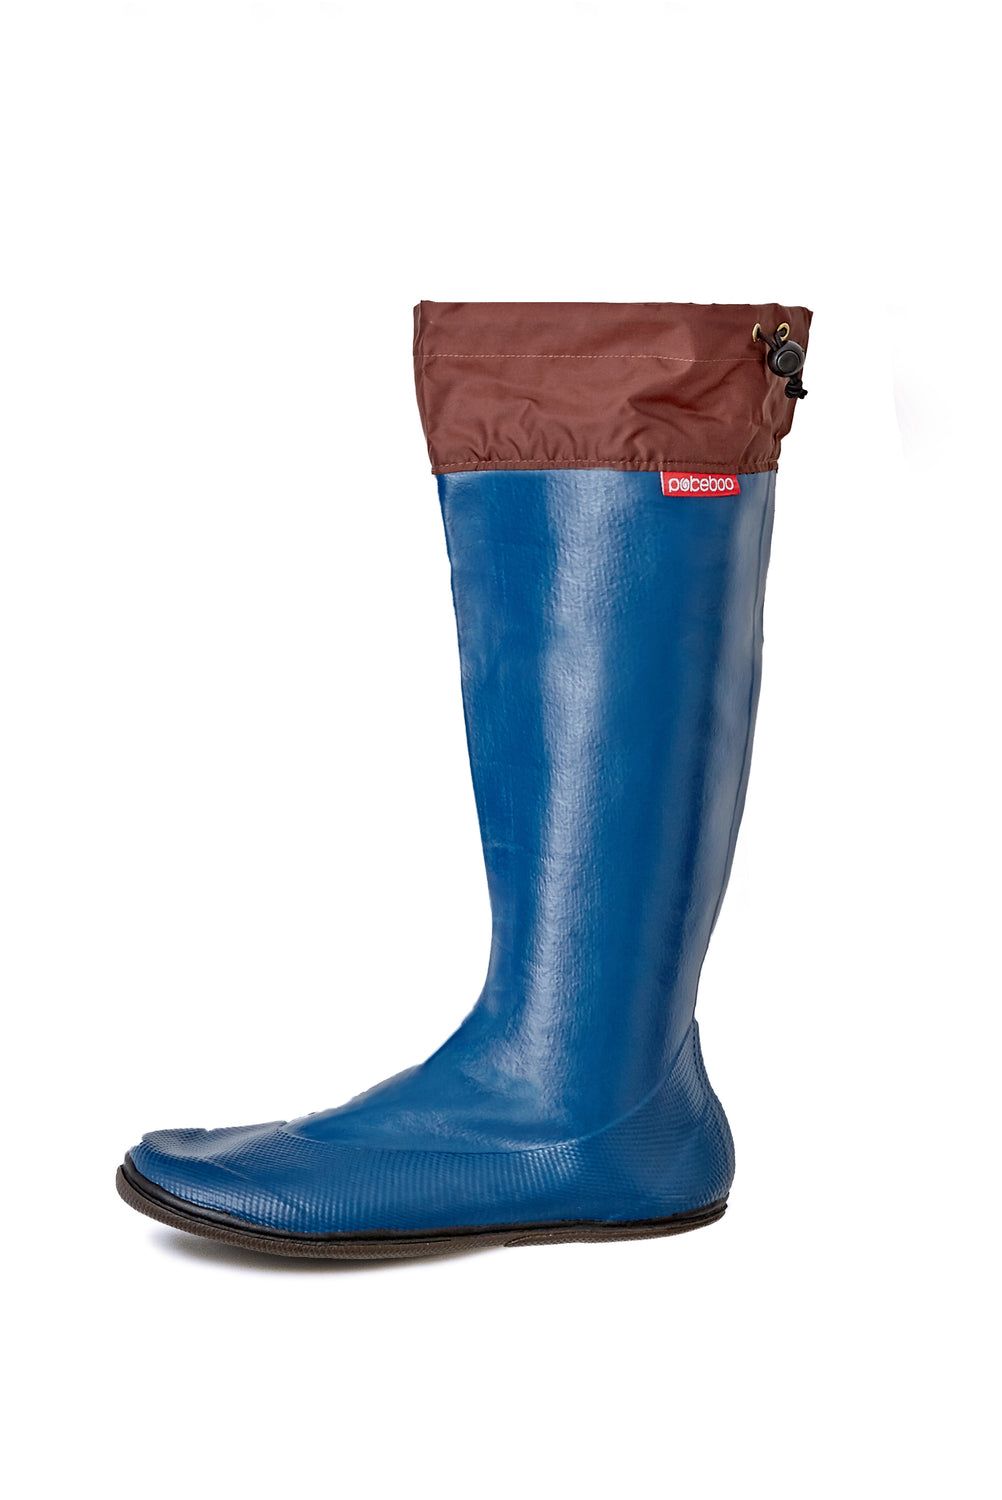 blue rain boot